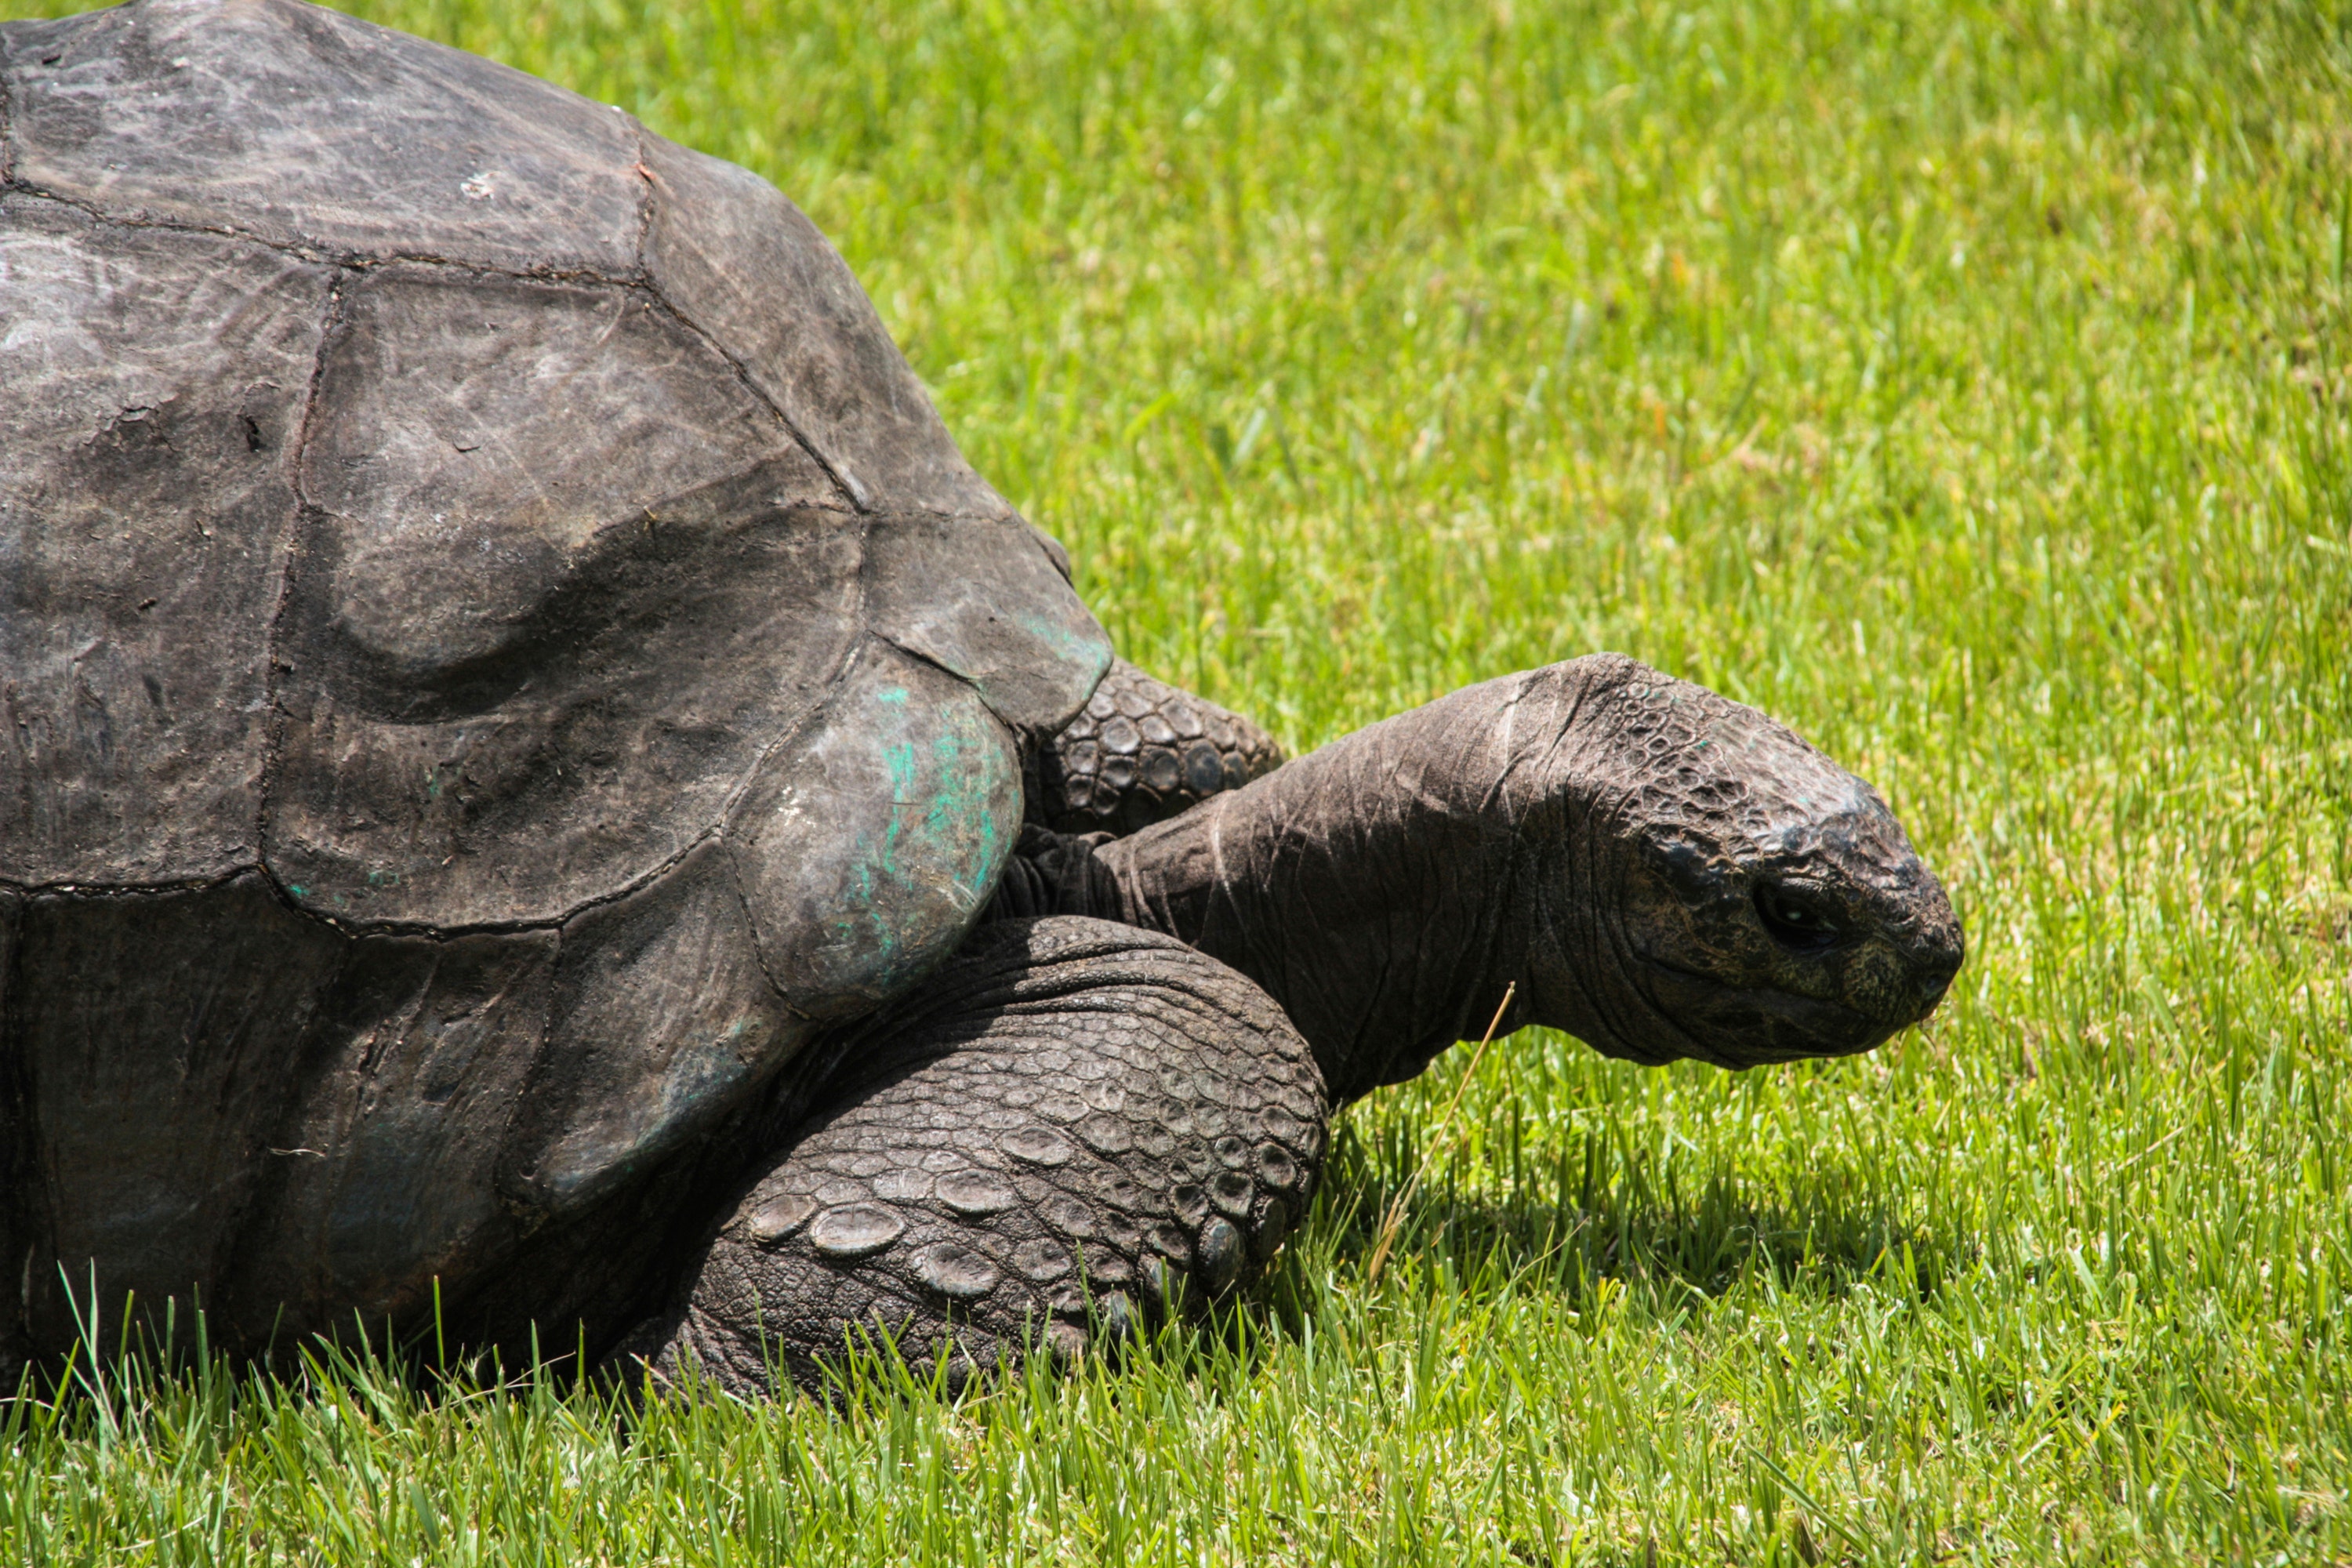 Tortoise jonathan the biggest tortoise